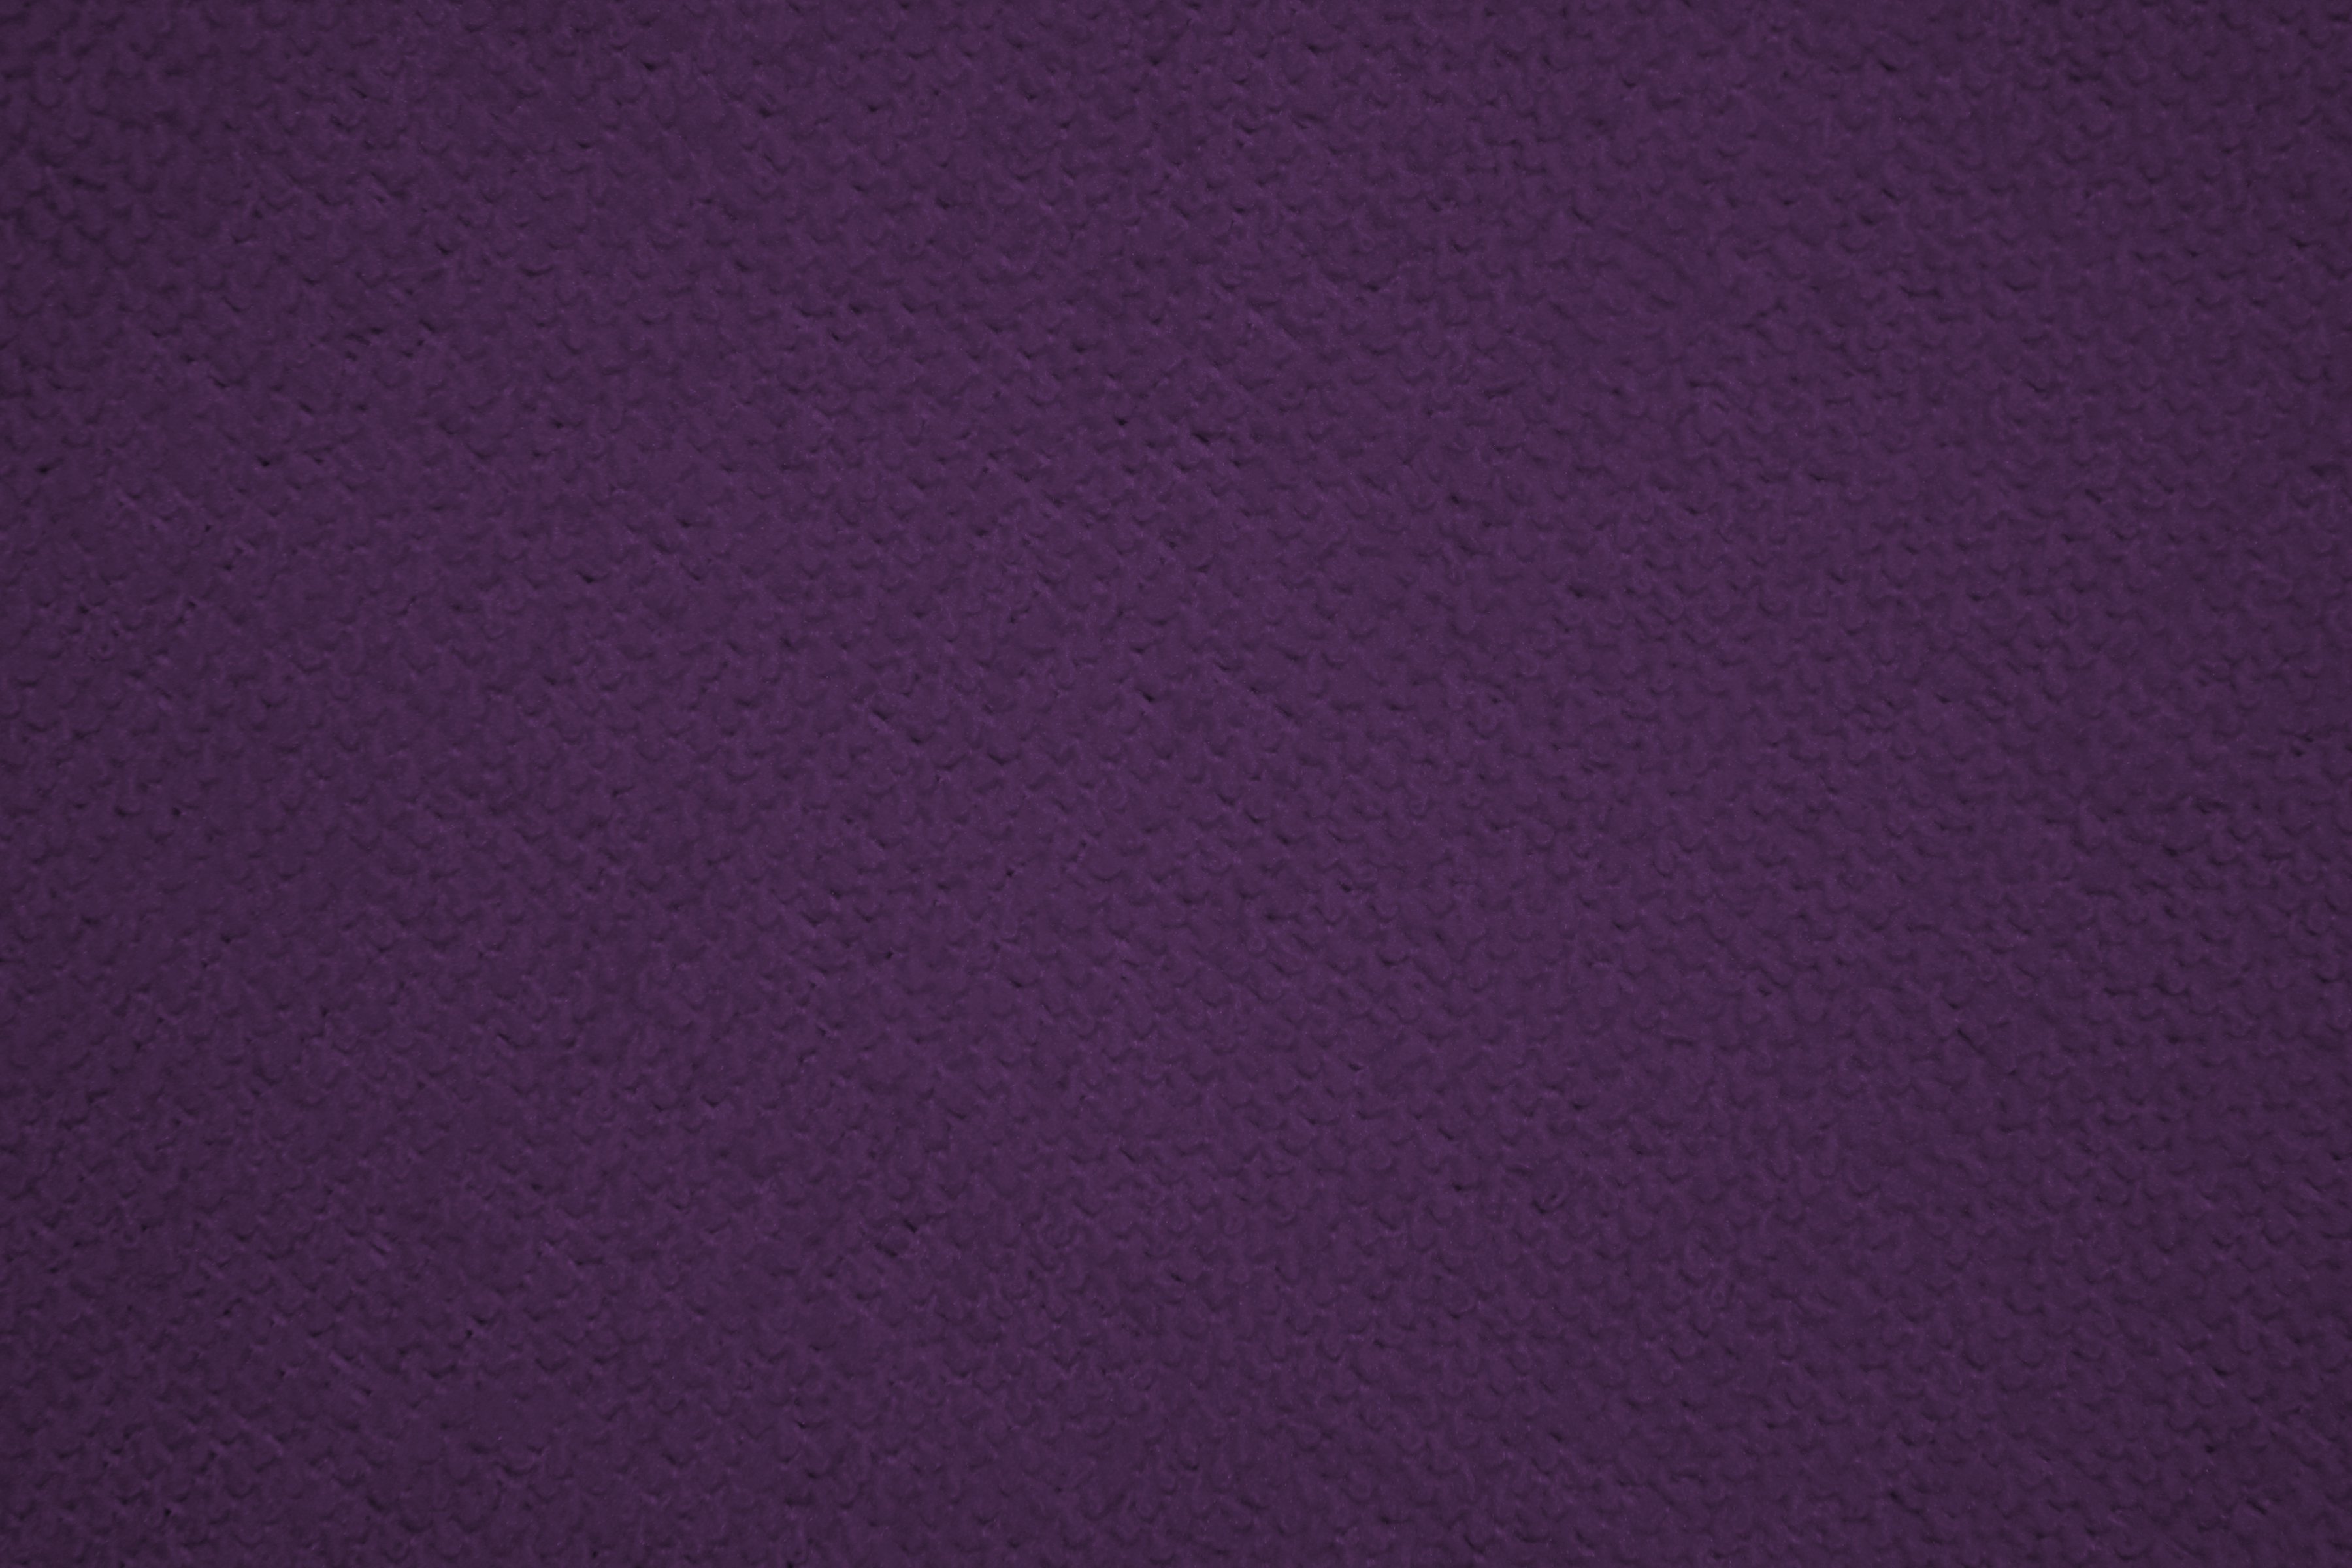 Plum Purple Microfiber Cloth Fabric Texture Picture Photograph